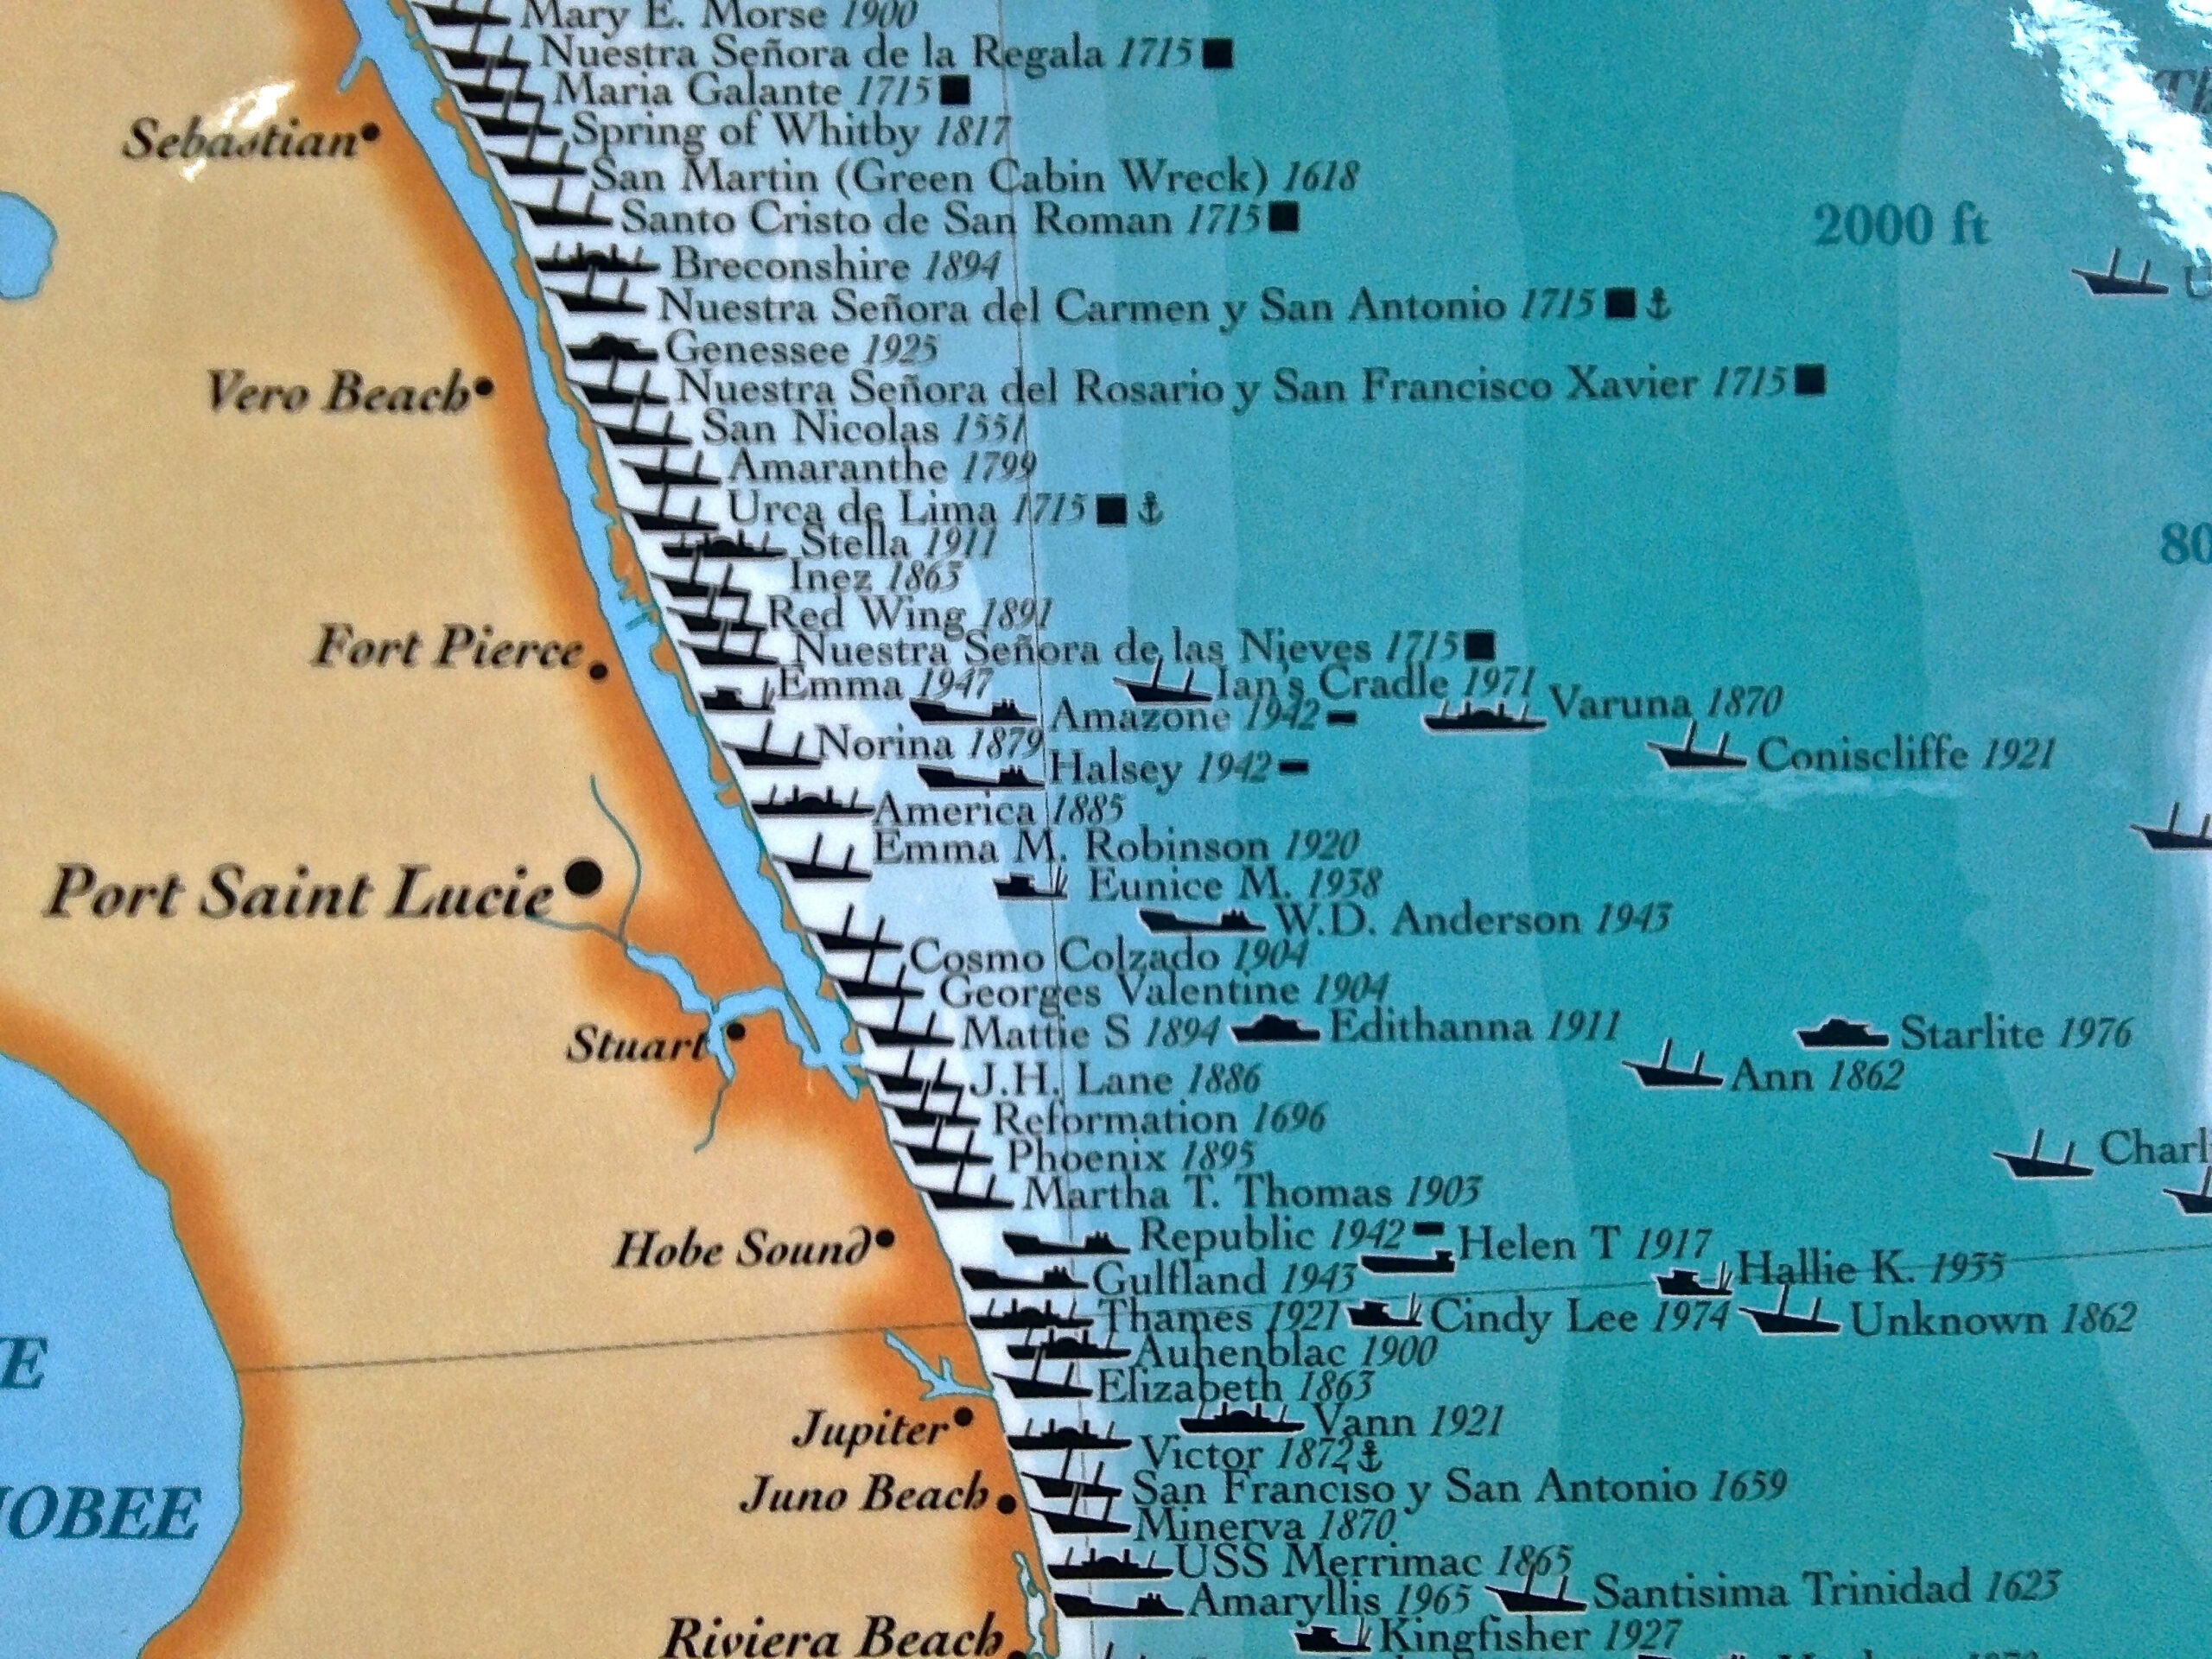 Florida Treasure Coast Shipwreck Map Yahoo Image Search Results 